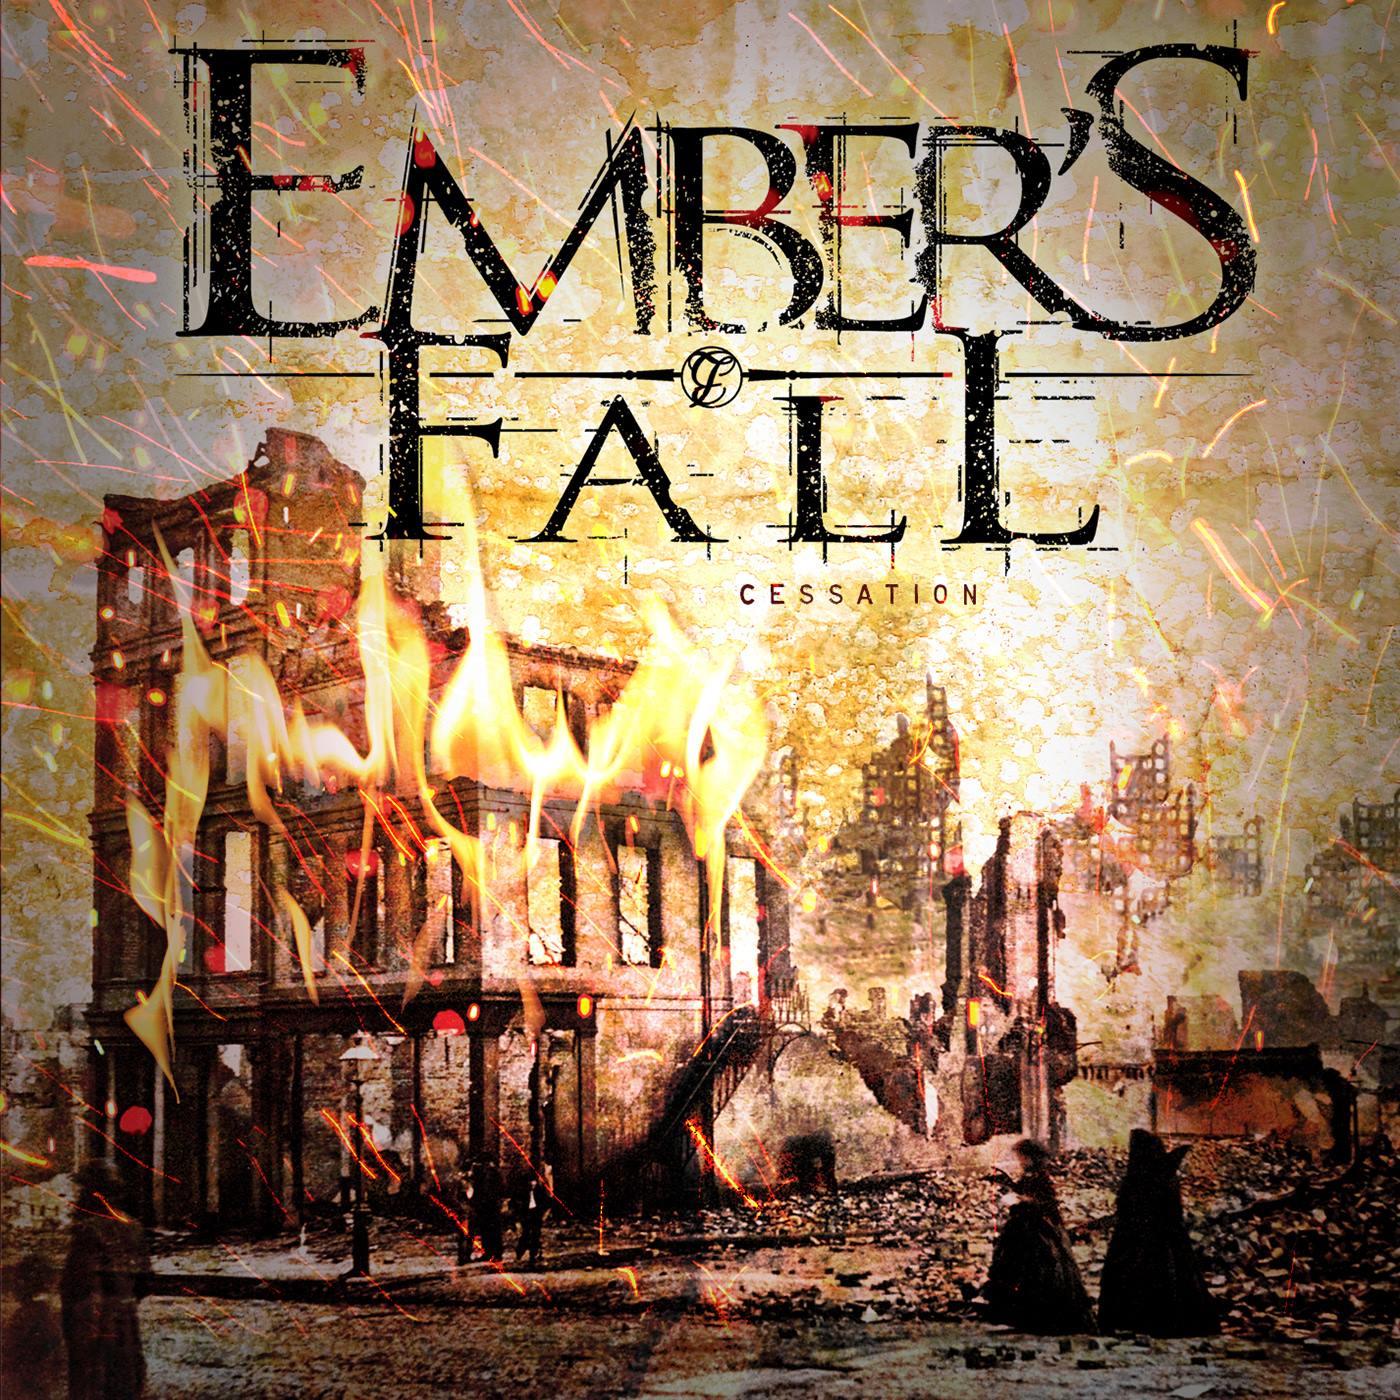 Ember's Fall - Cessation (2015) Album Info